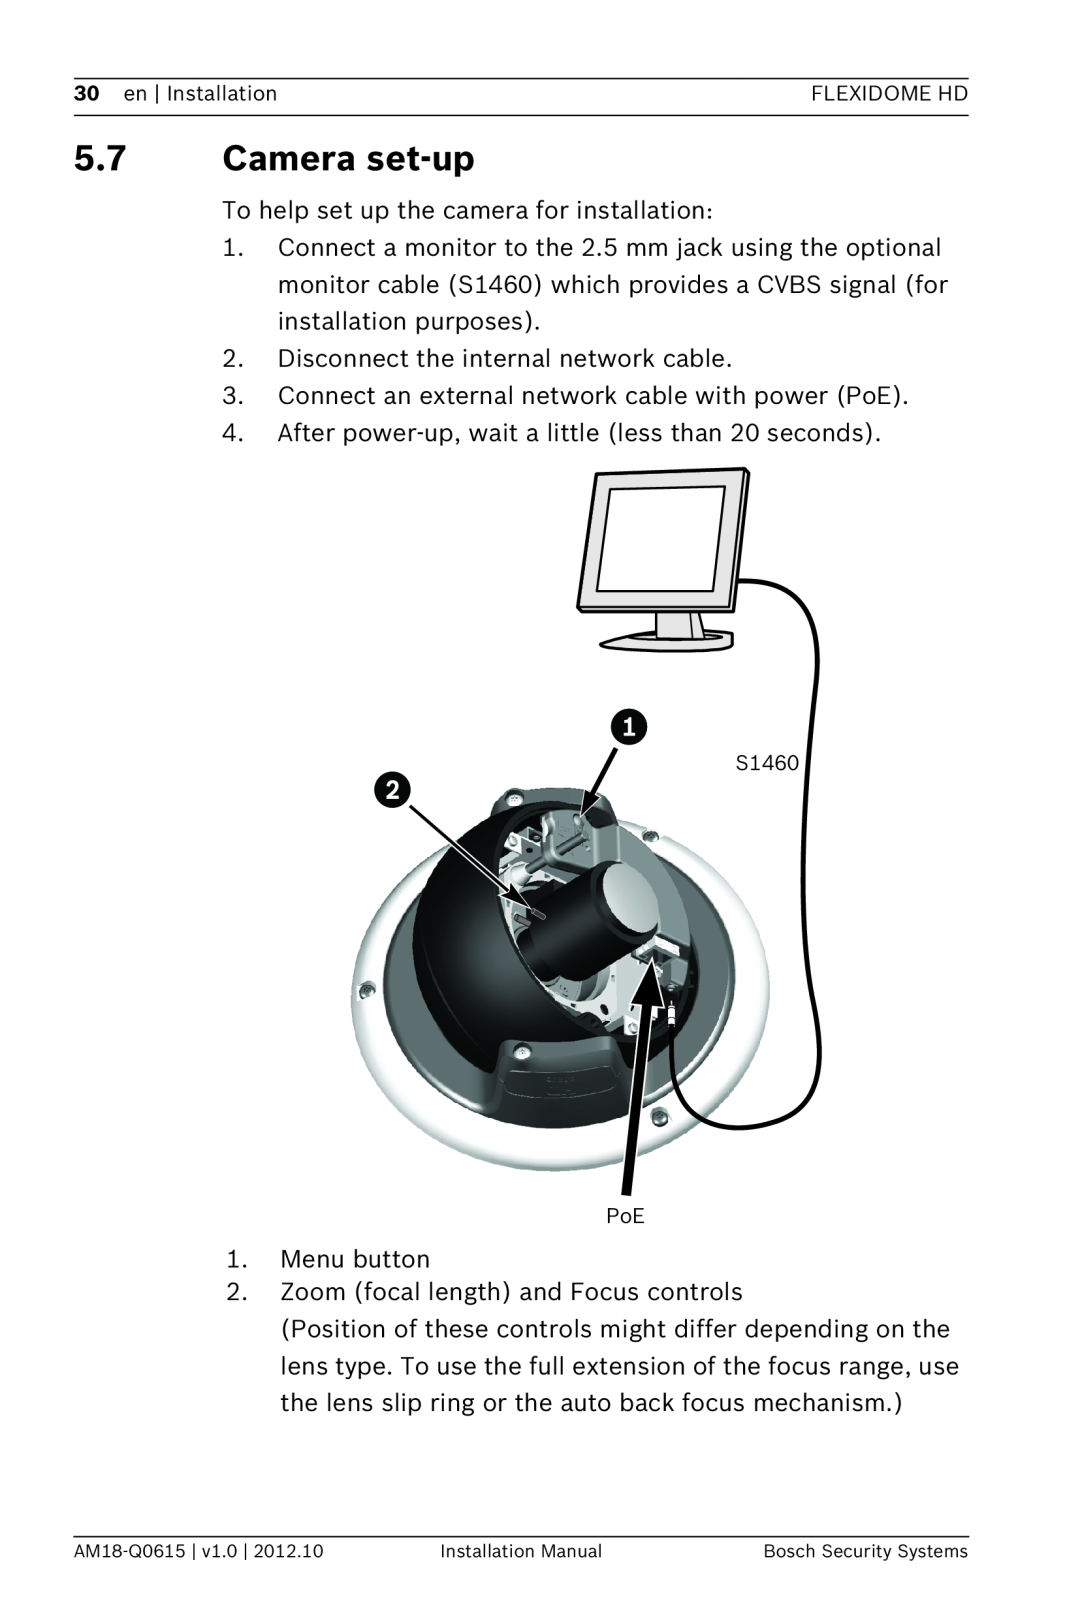 Bosch Appliances NDN-733 installation manual 5.7Camera set-up 